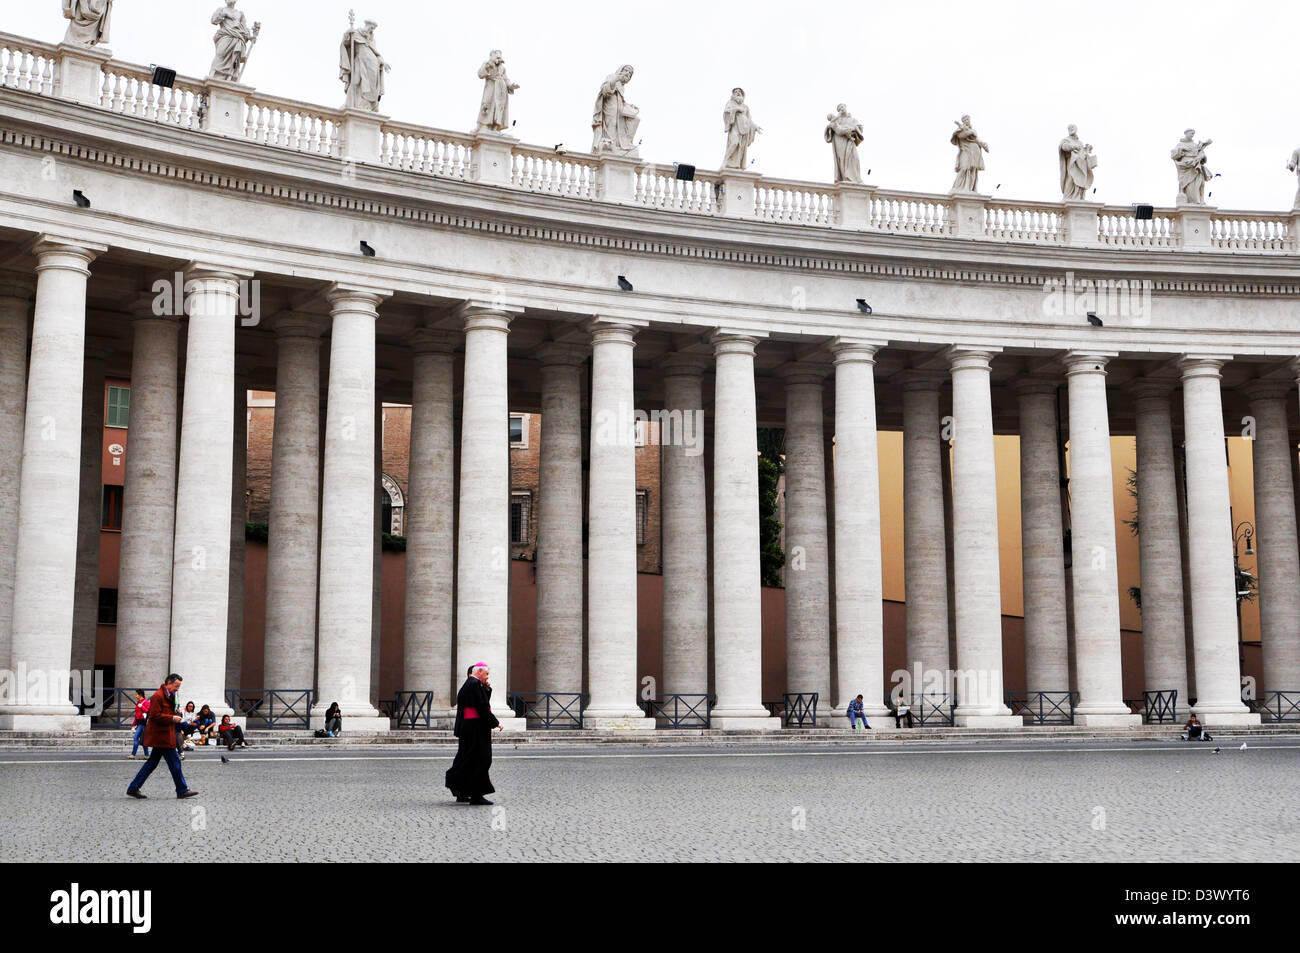 Roman Columns, St Peter's Square, Vatican City, Rome, Italy Stock Photo